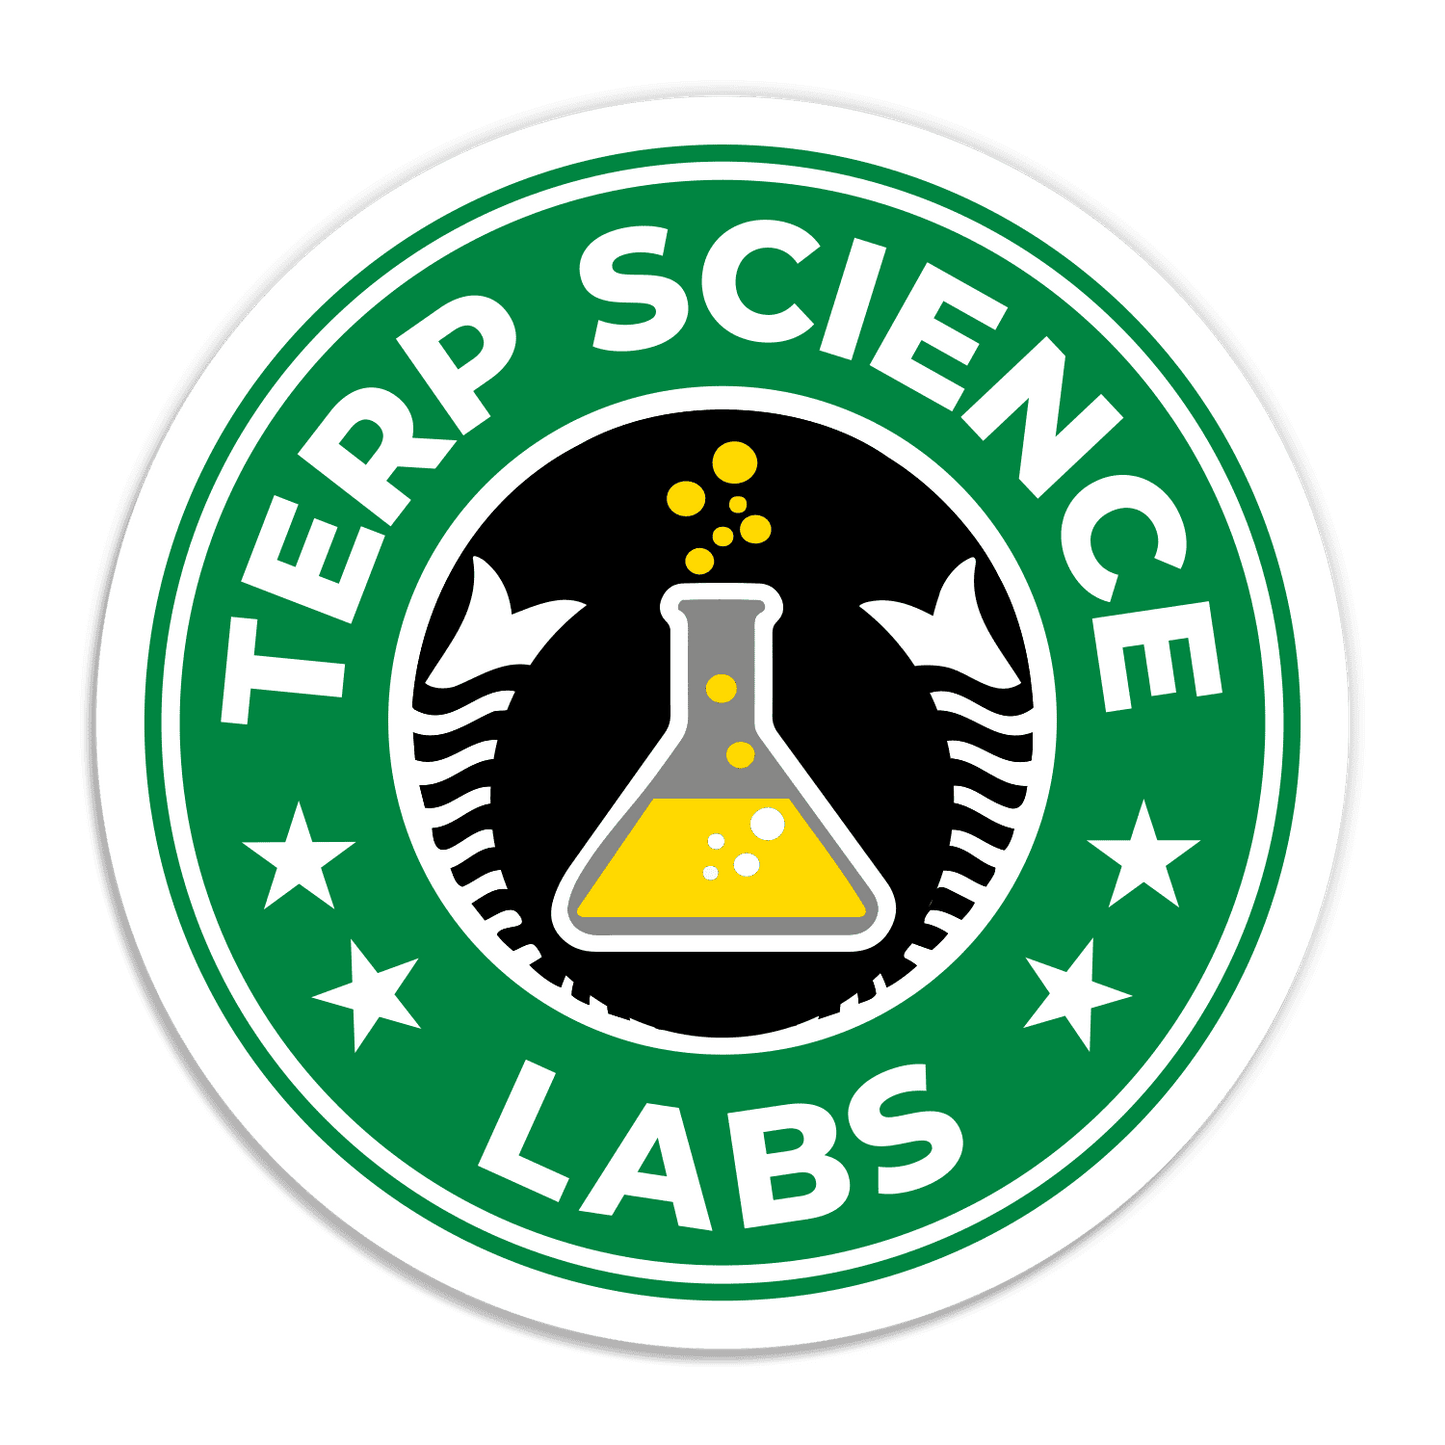 Terp Science - Starbies Decal